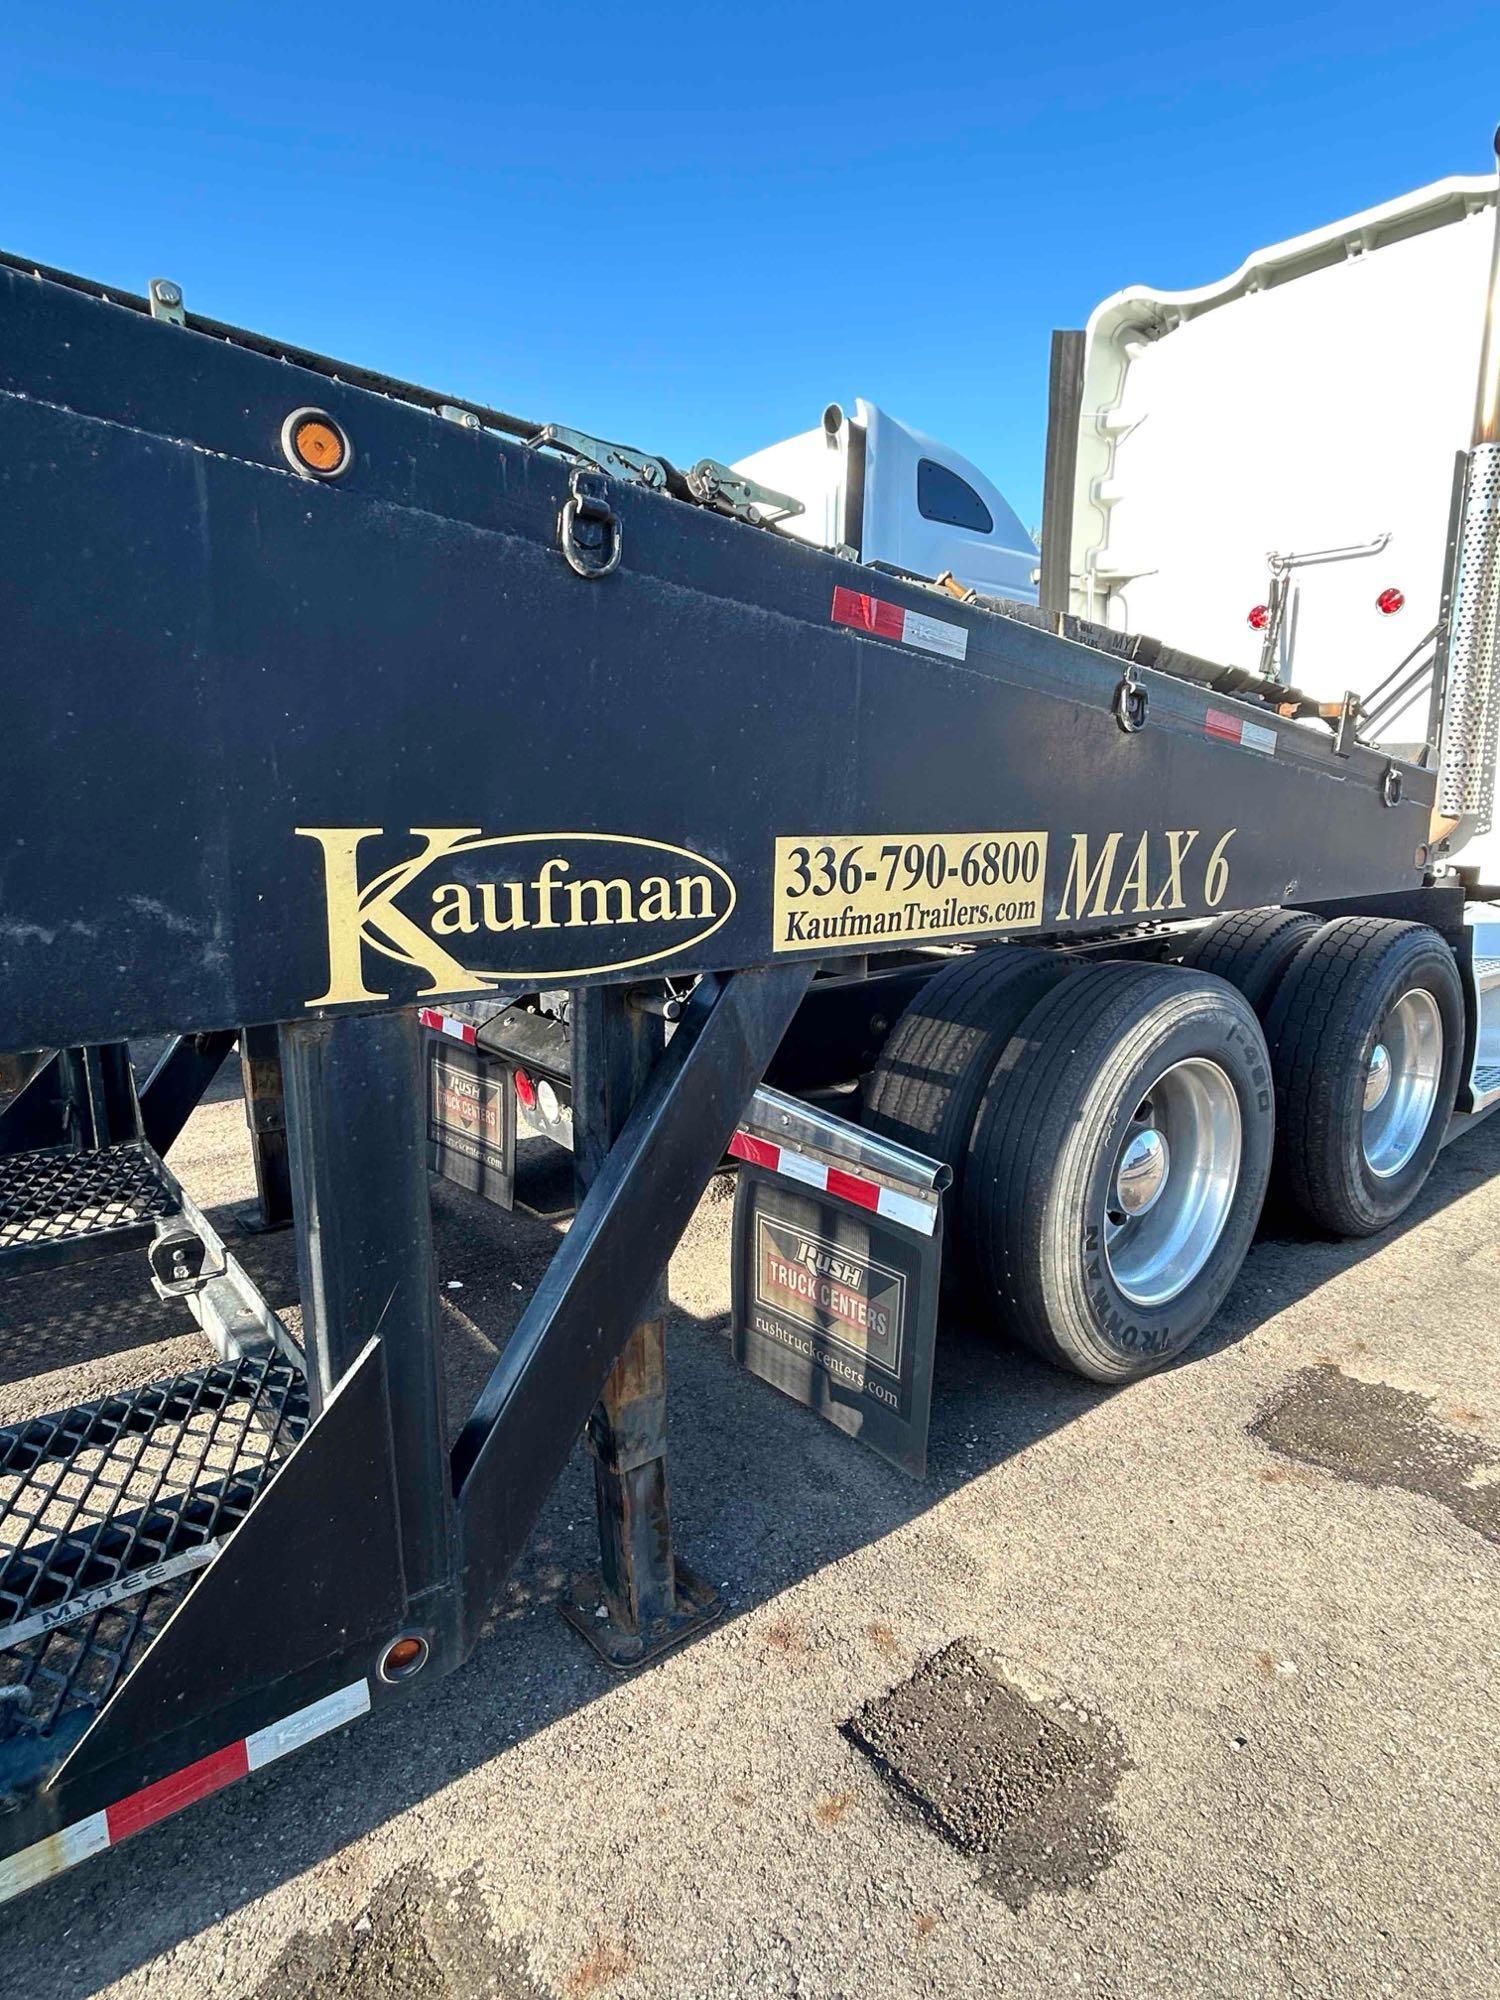 2021 Kaufman MAX 6 Double Deck 53? car hauling trailer